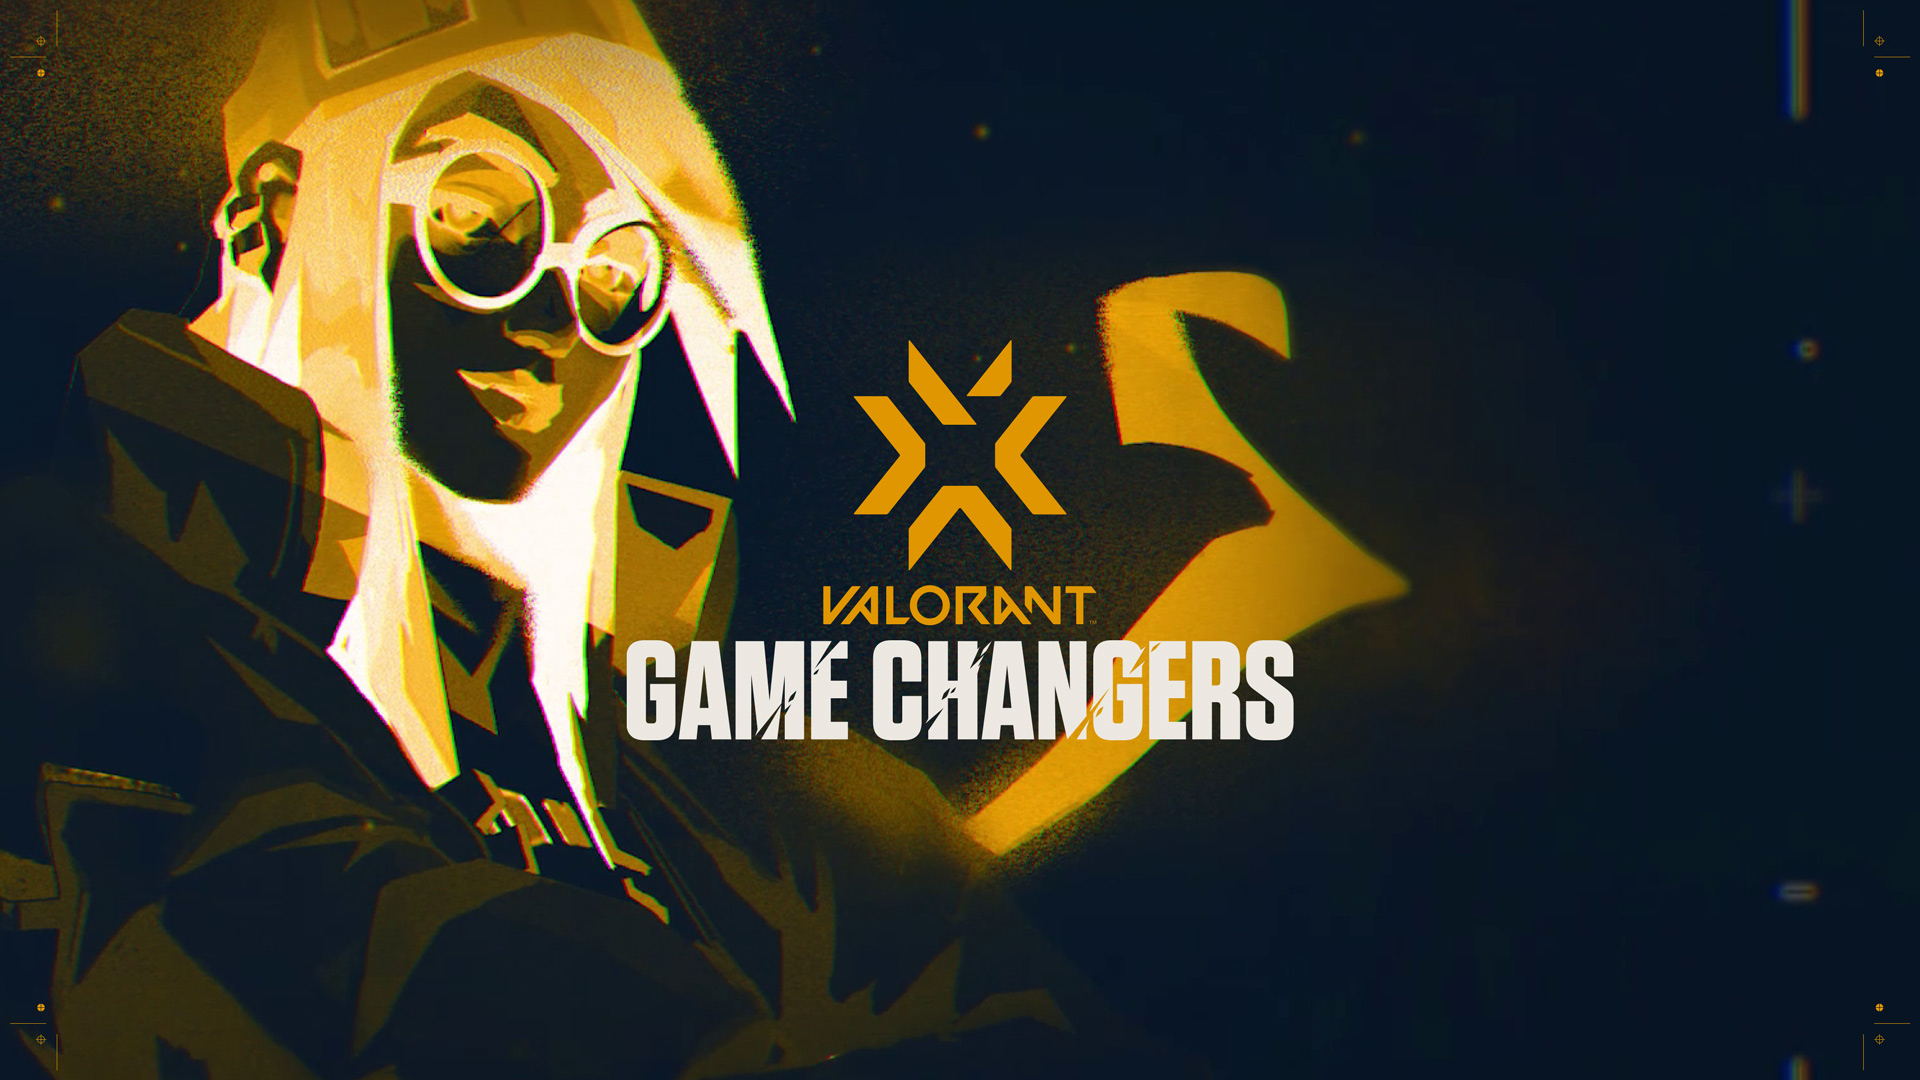 Game Changers Championship 2023 anuncia tabela de jogos, valorant